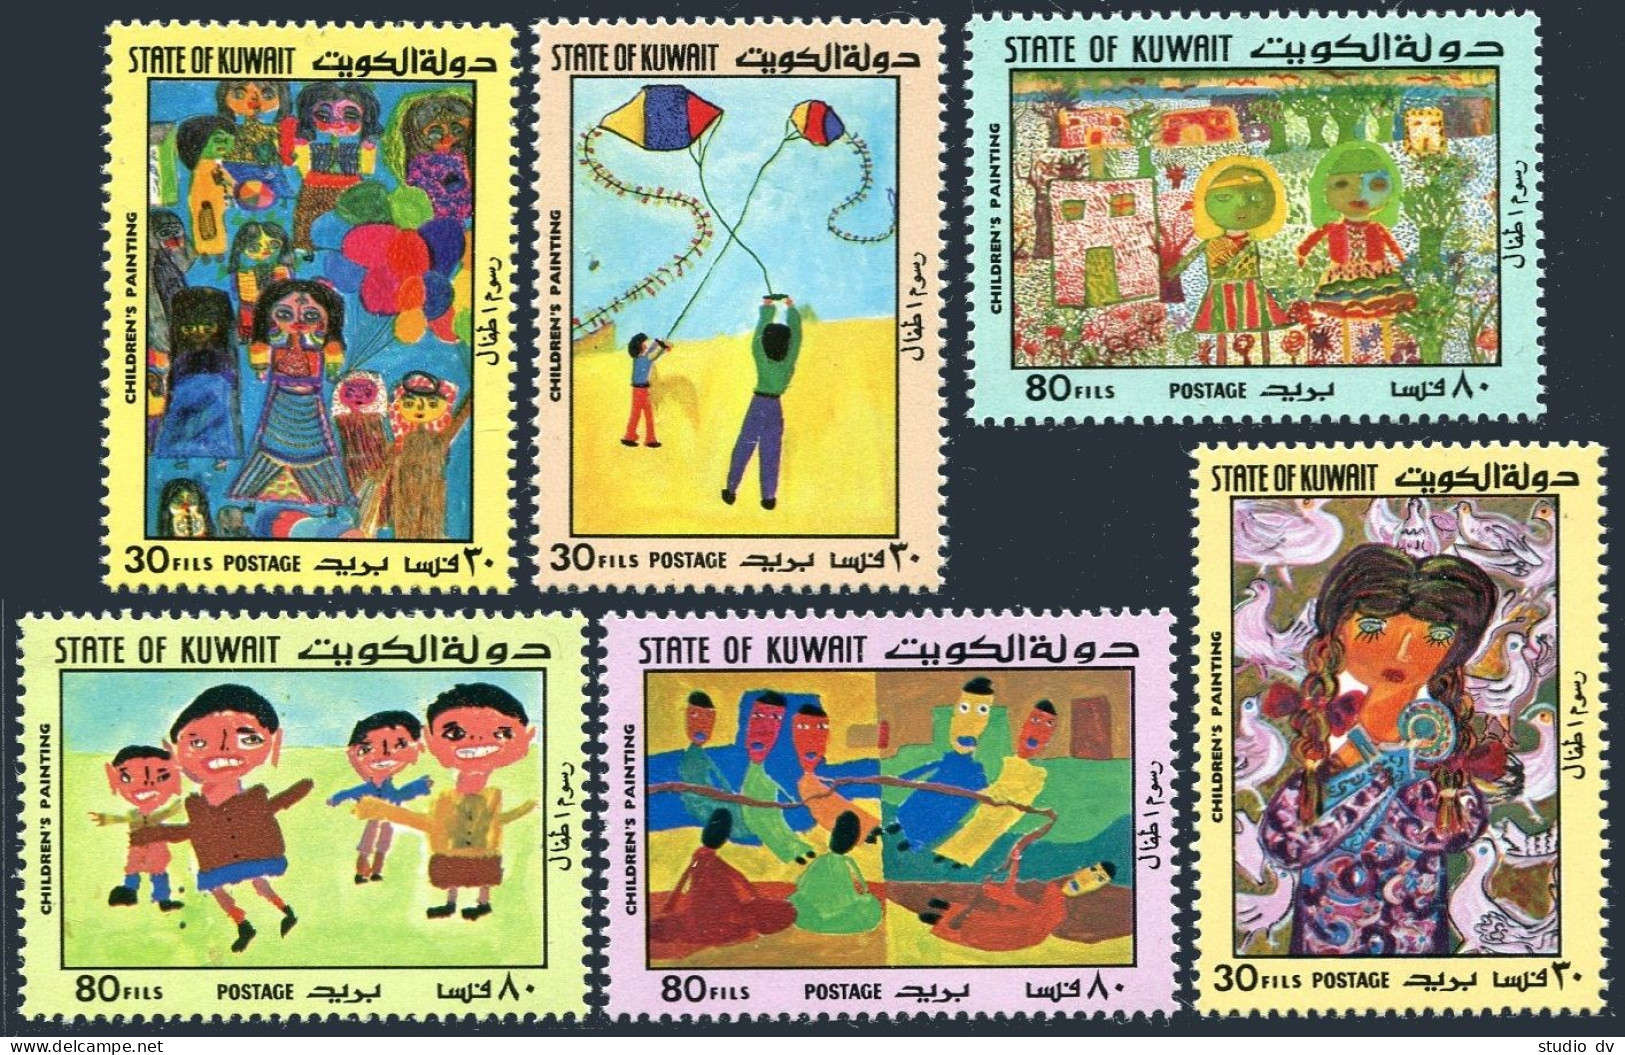 Kuwait 784-789, MNH. Michel 826-831. Children Paintings, 1979. - Kuwait